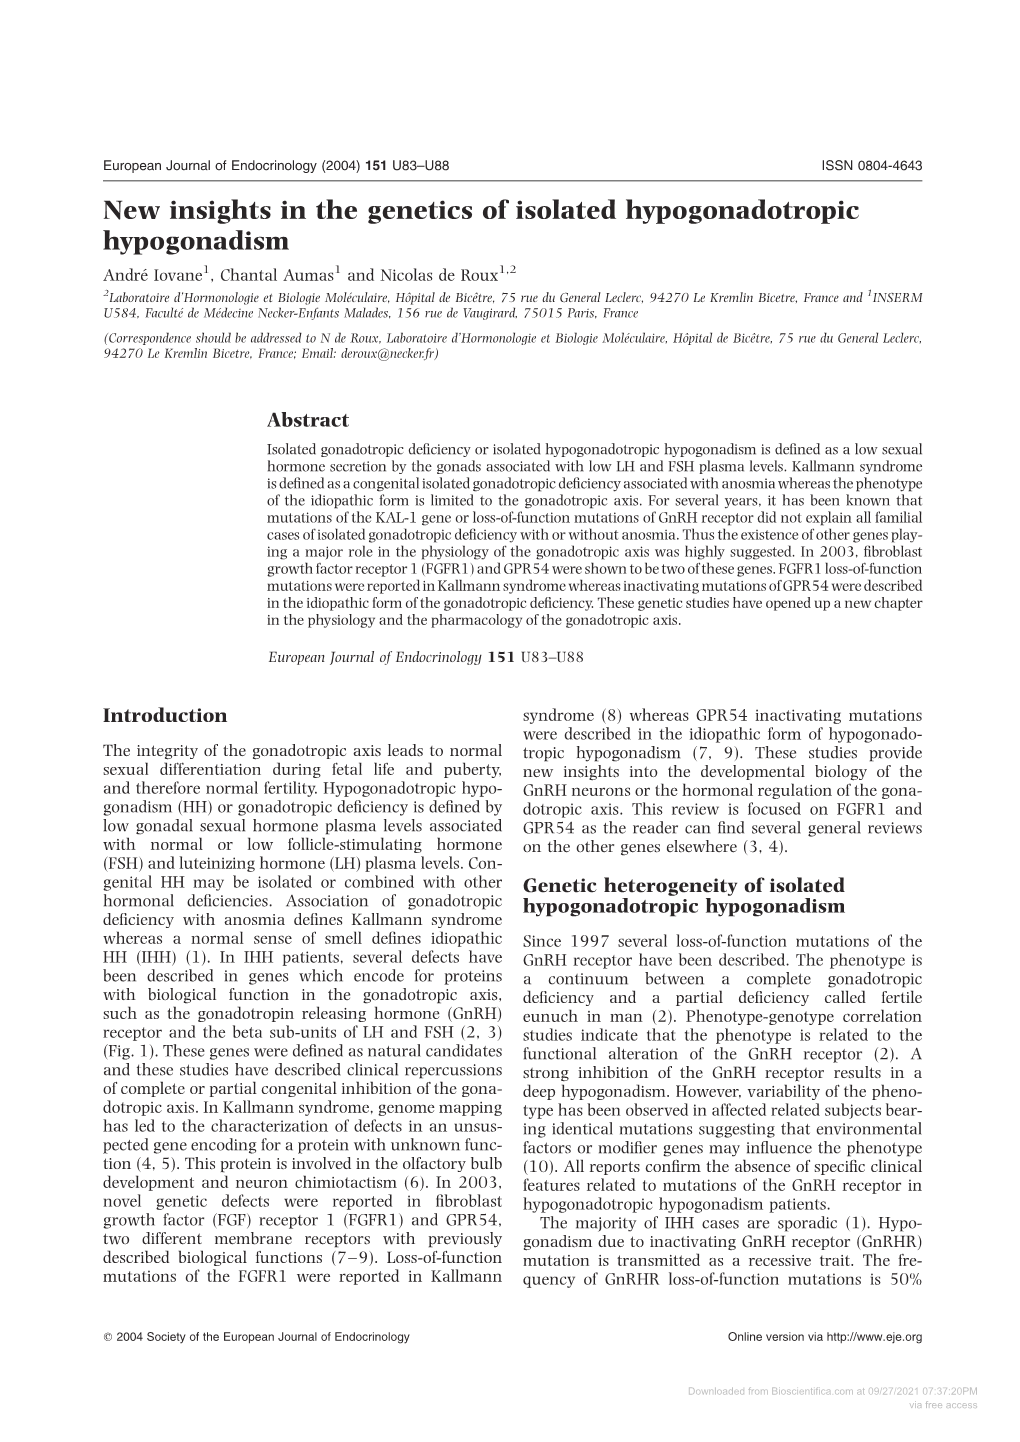 New Insights in the Genetics of Isolated Hypogonadotropic Hypogonadism